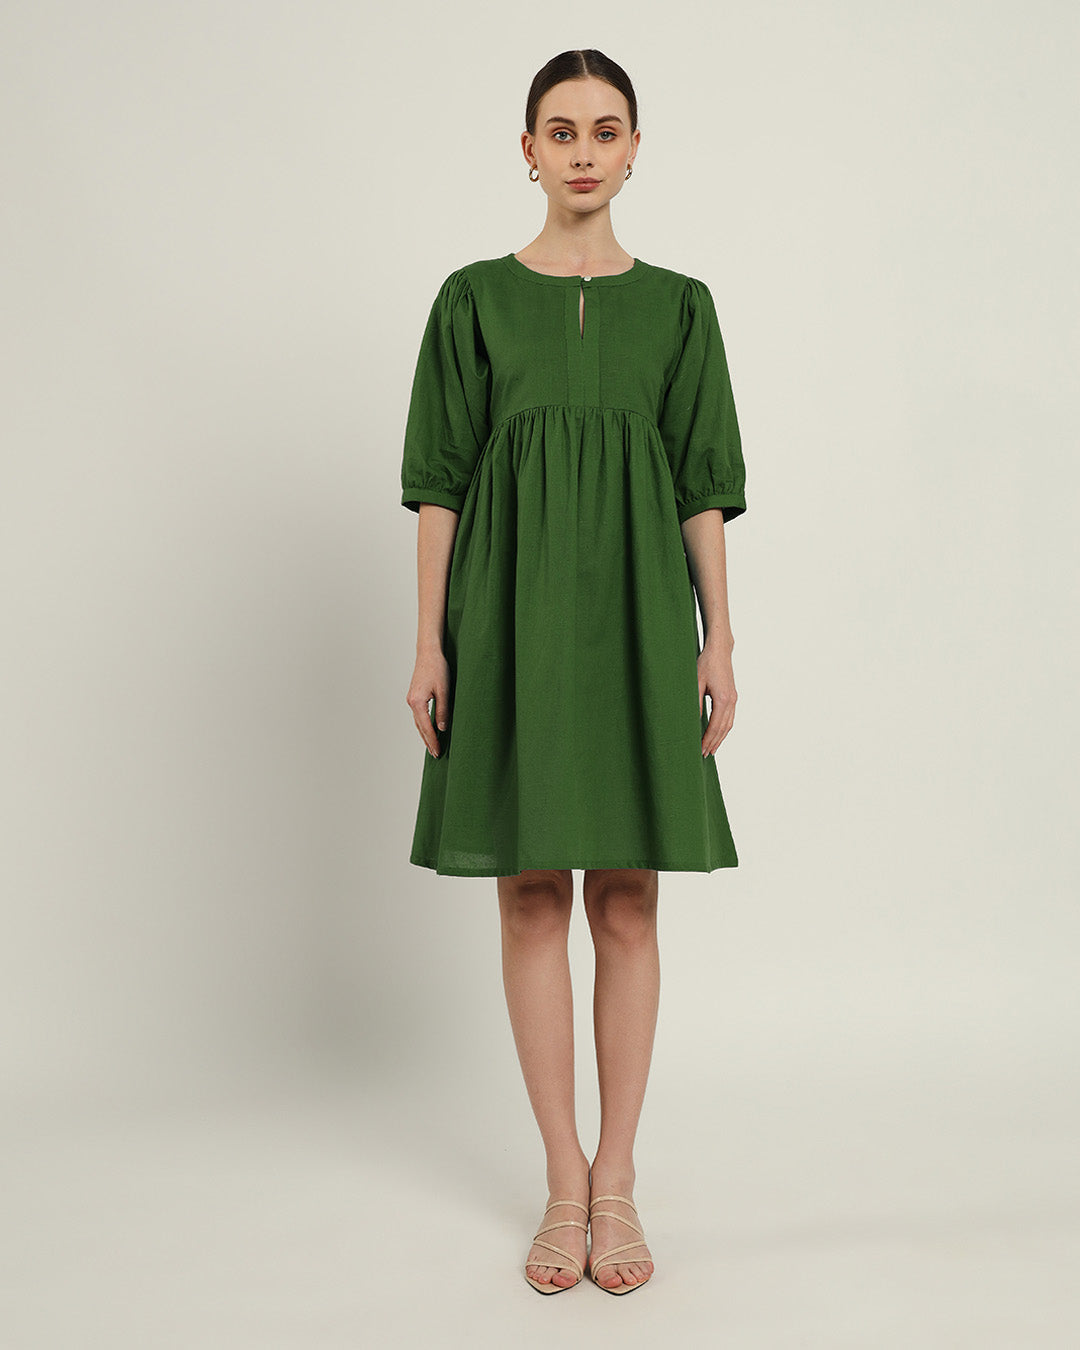 The Aira Emerald Cotton Dress